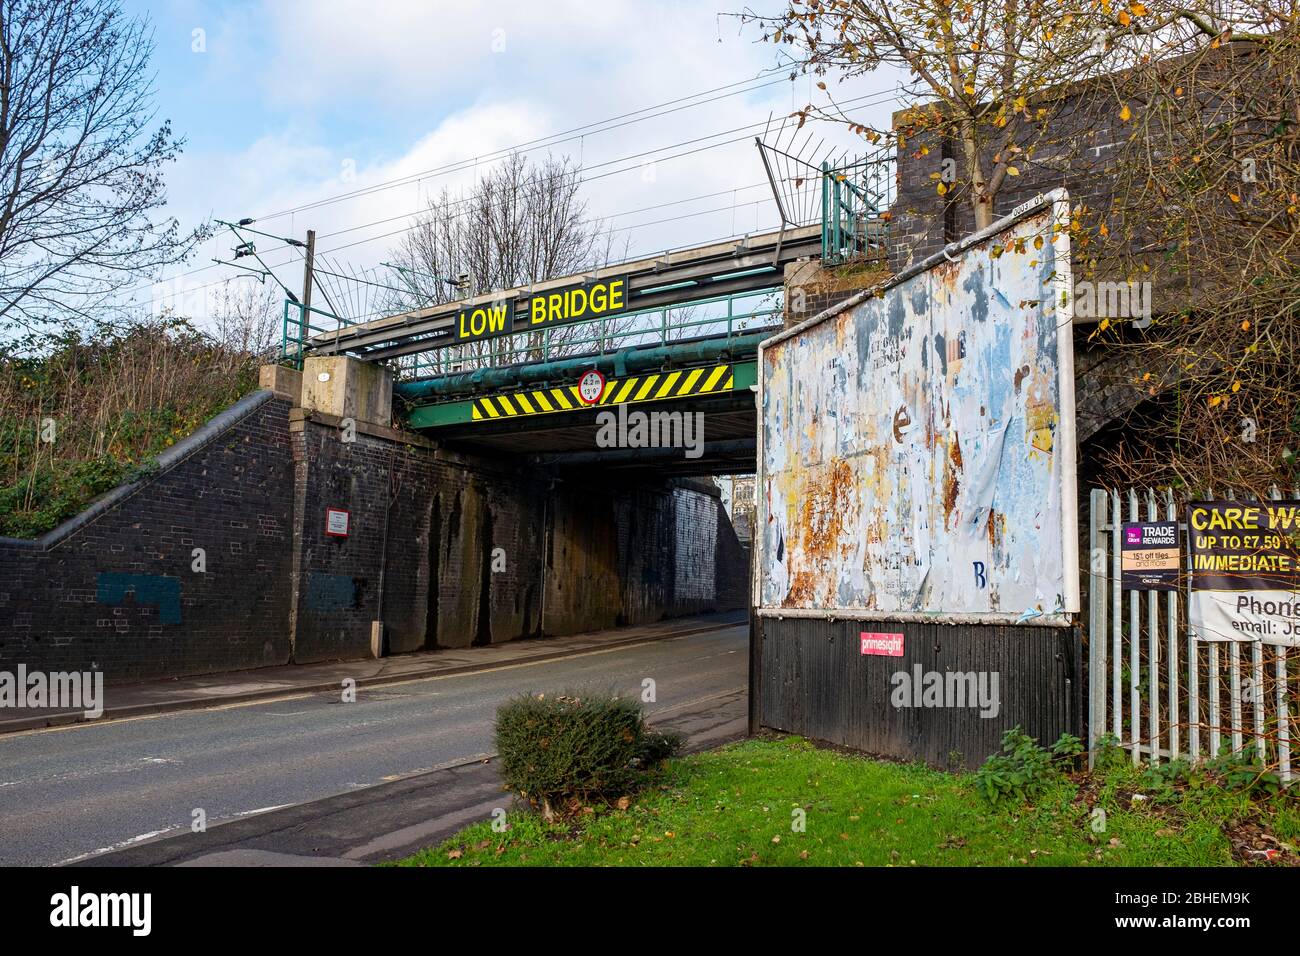 Low bridge warning sign with weathered billboard in Crewe Cheshire UK Stock Photo